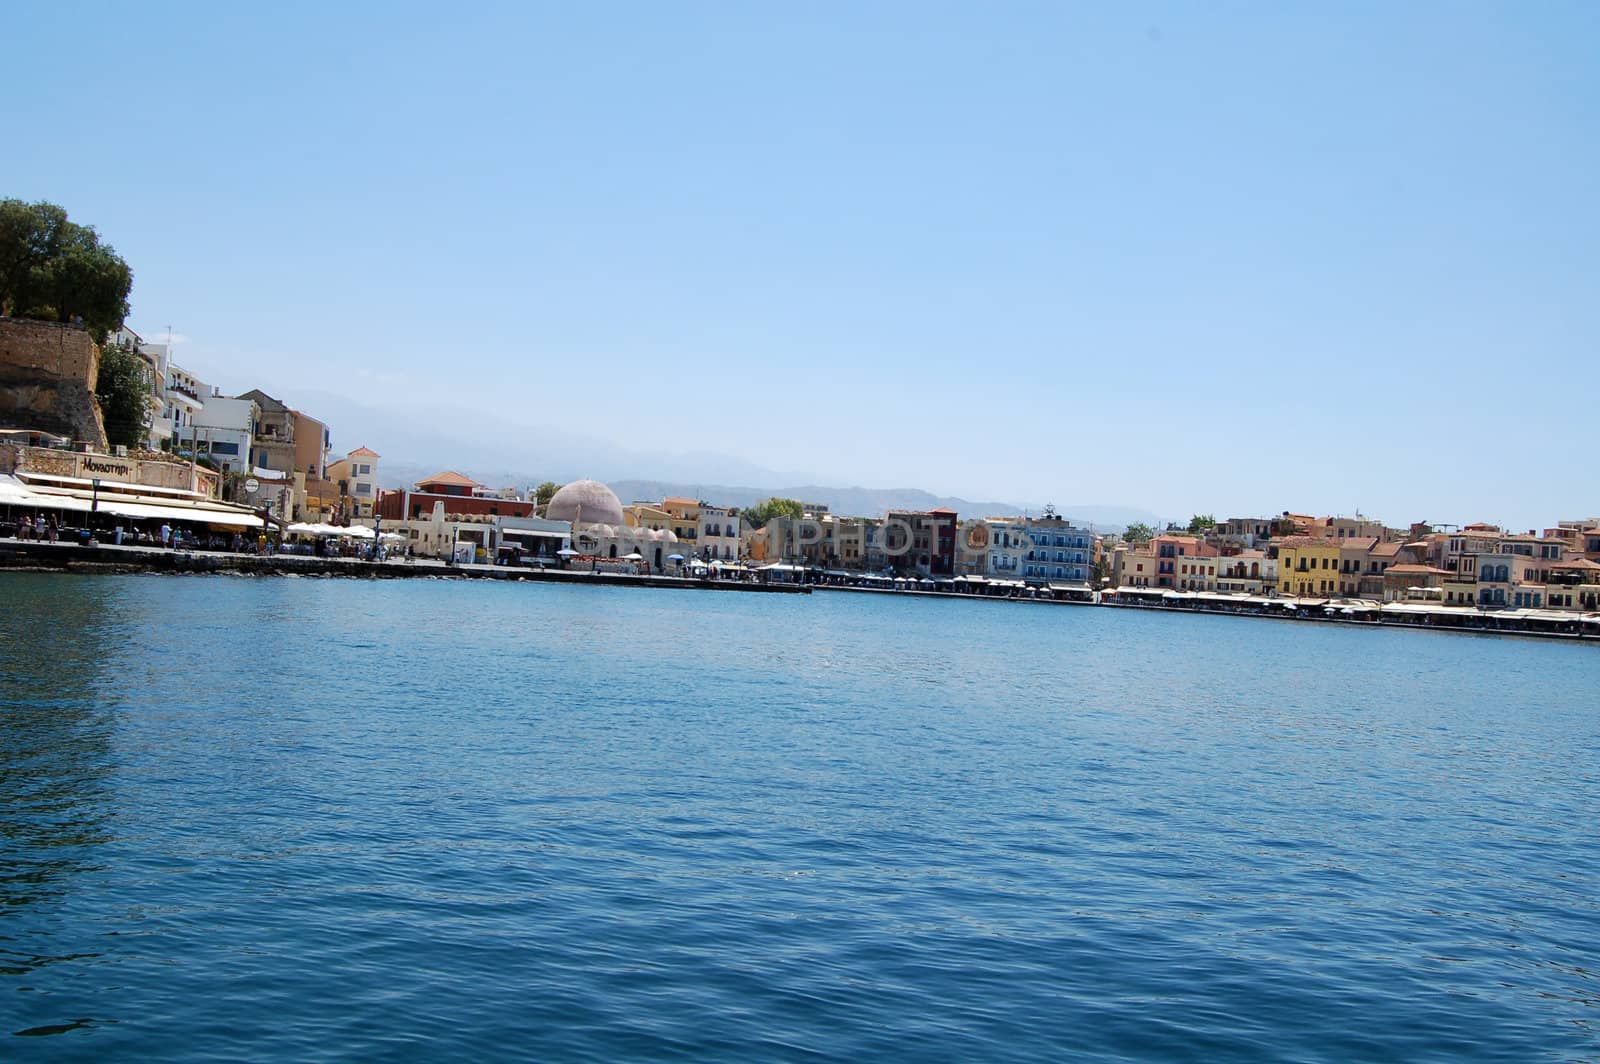 Old port of Chania, Crete